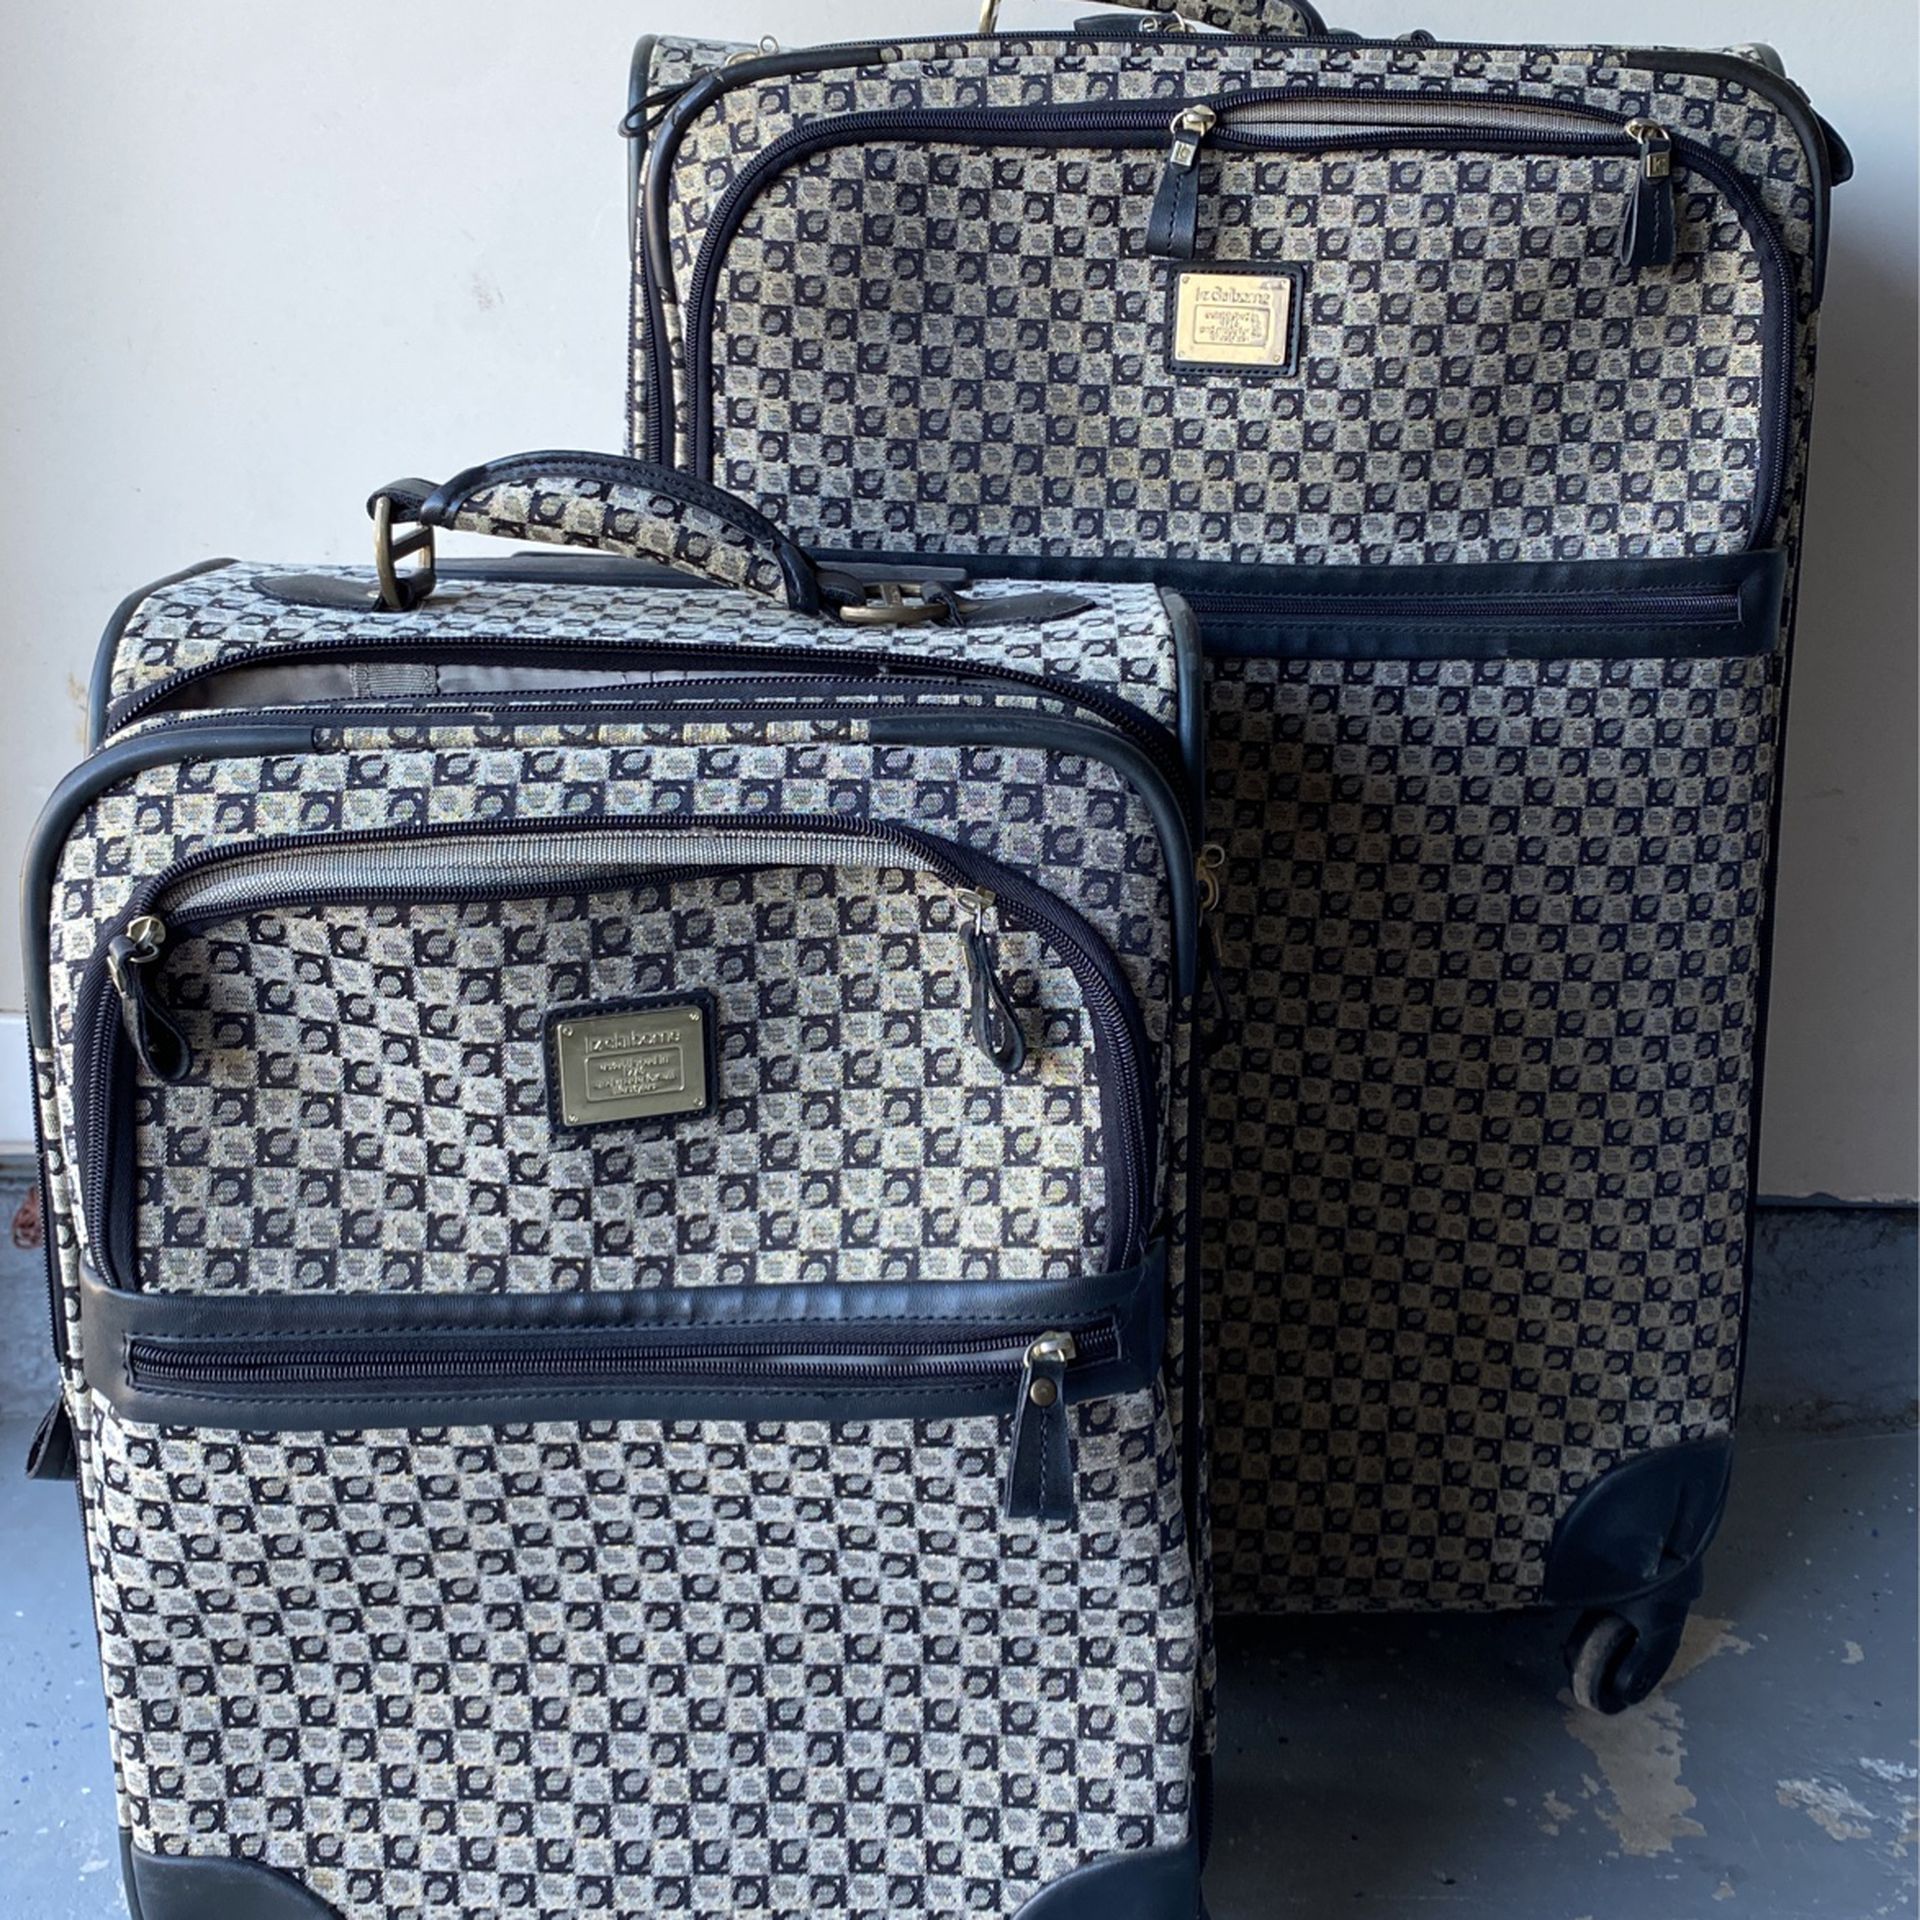 Liz Claiborne Luggage Set for Sale in Manvel, TX - OfferUp